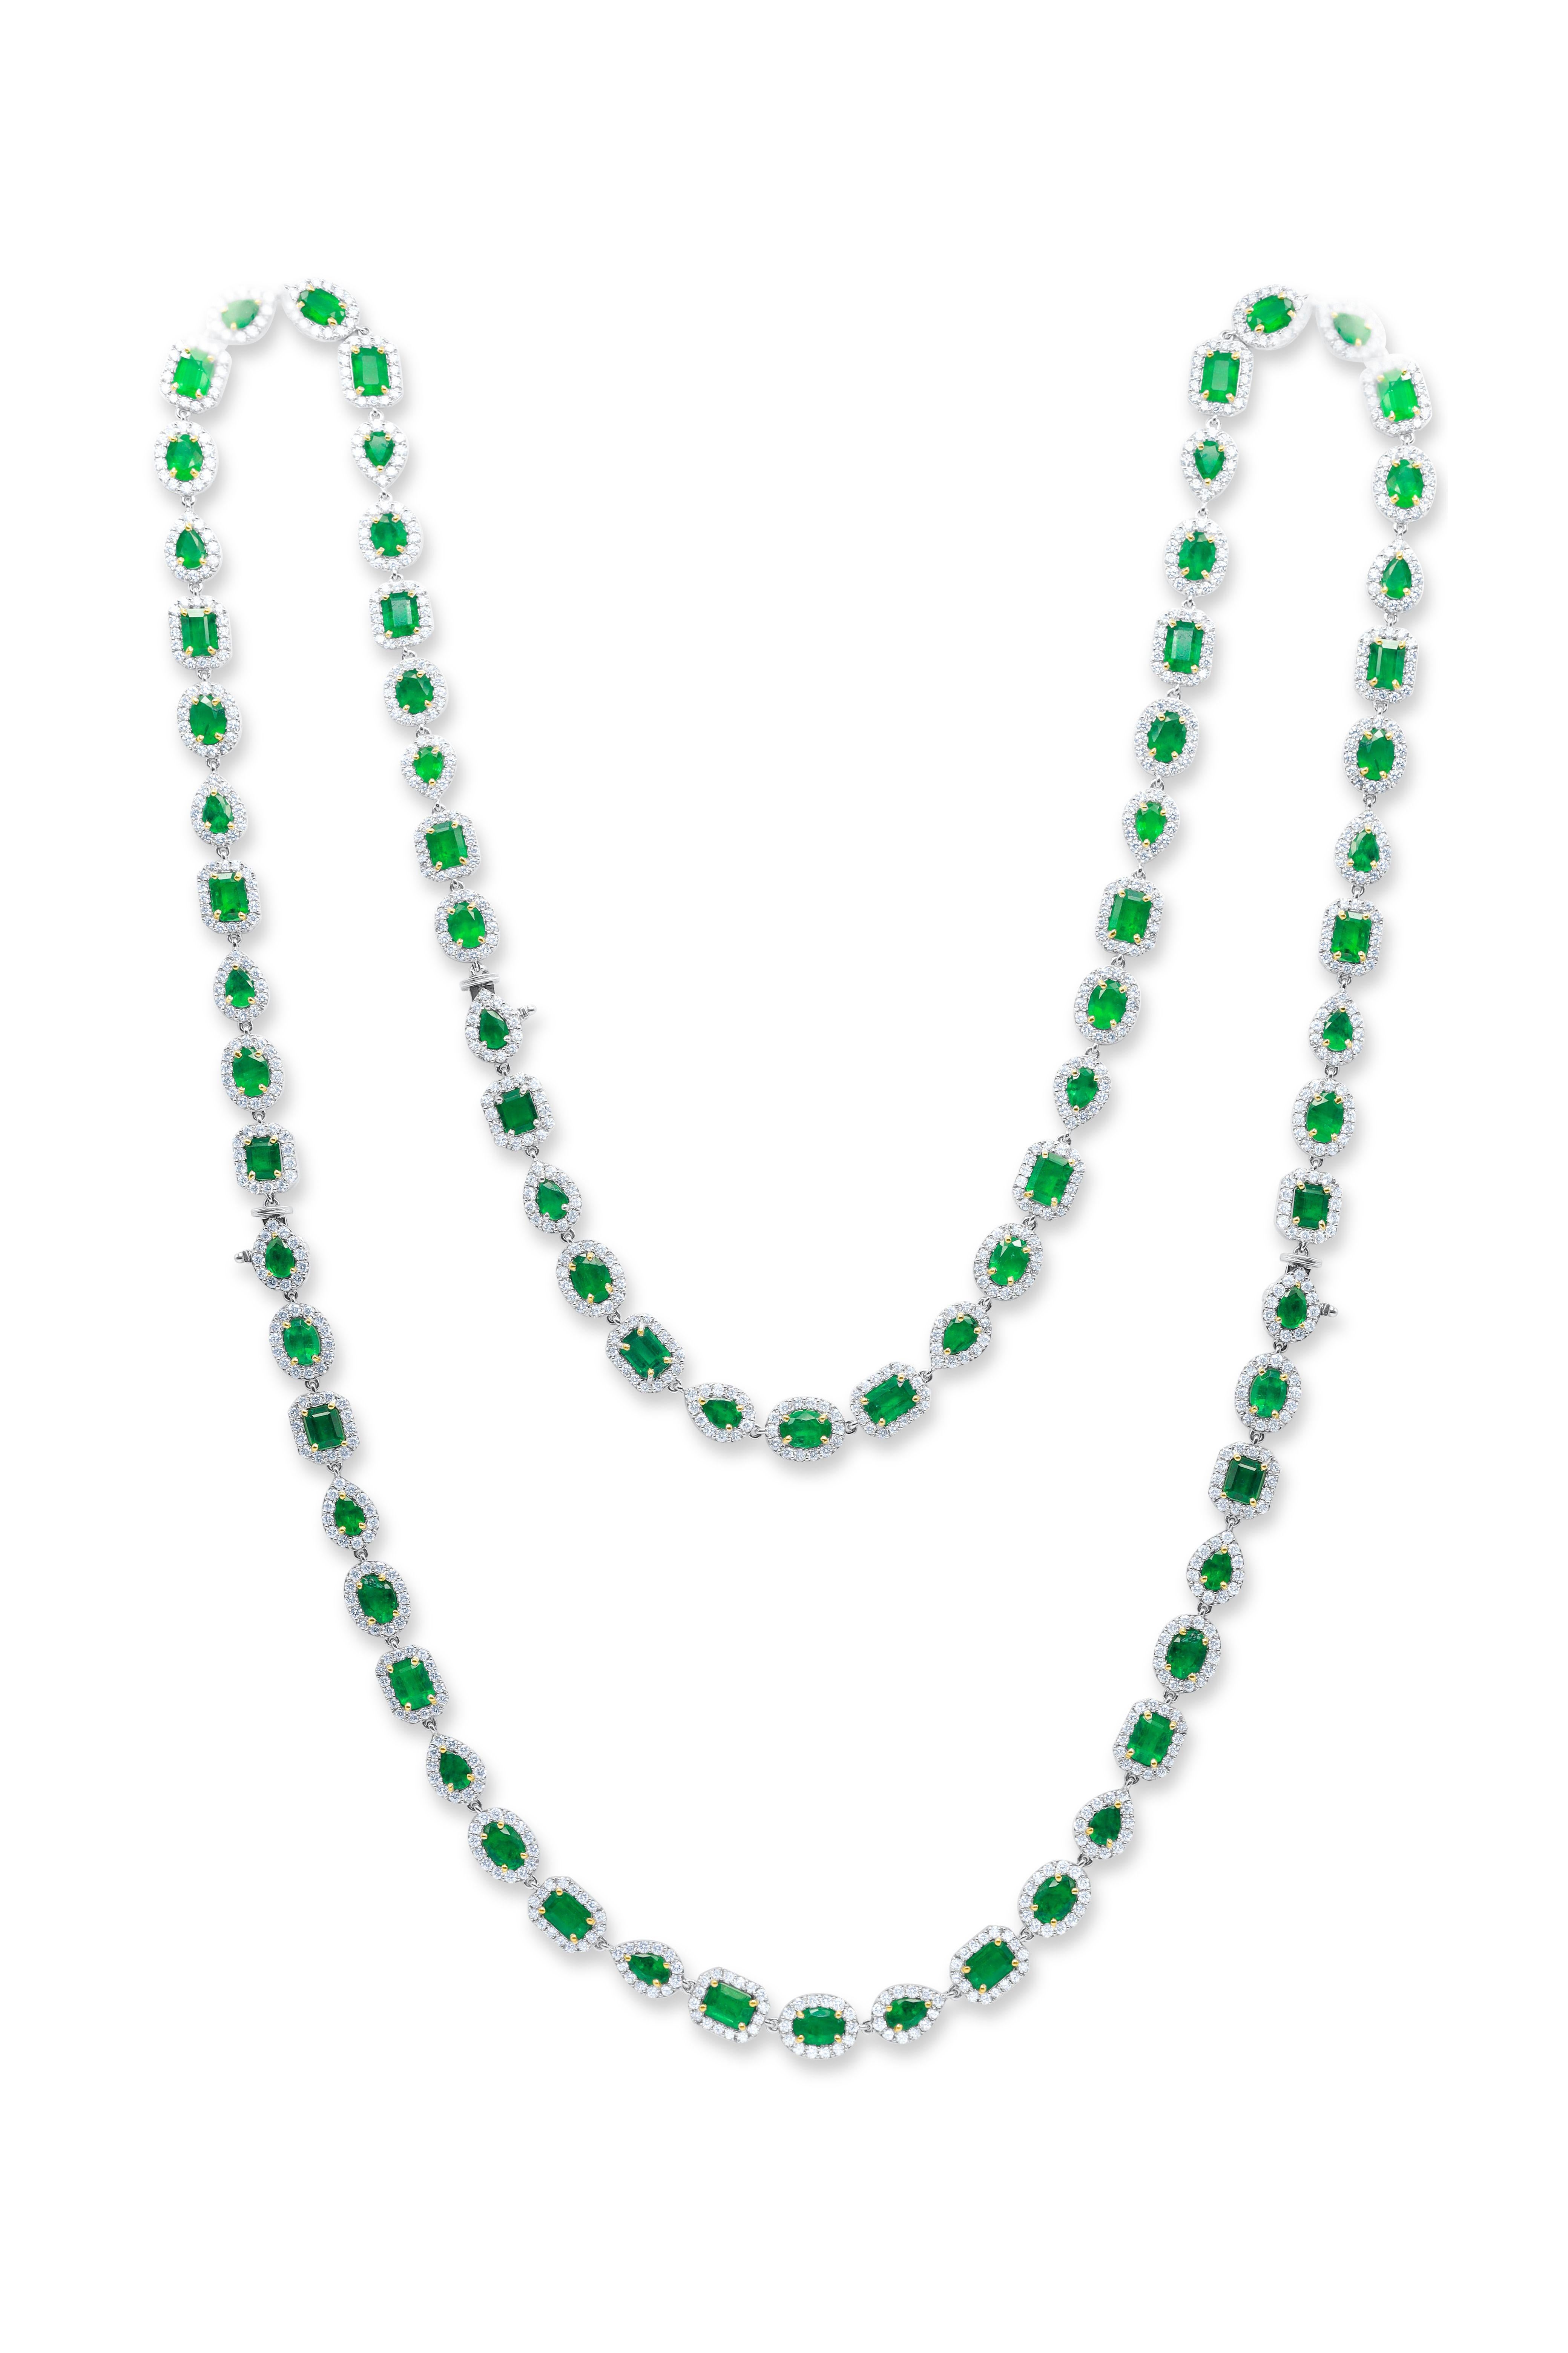 Asscher Cut Diana M. Mixed Shape 46.10 Carat Emerald and Diamond Halo Necklace For Sale